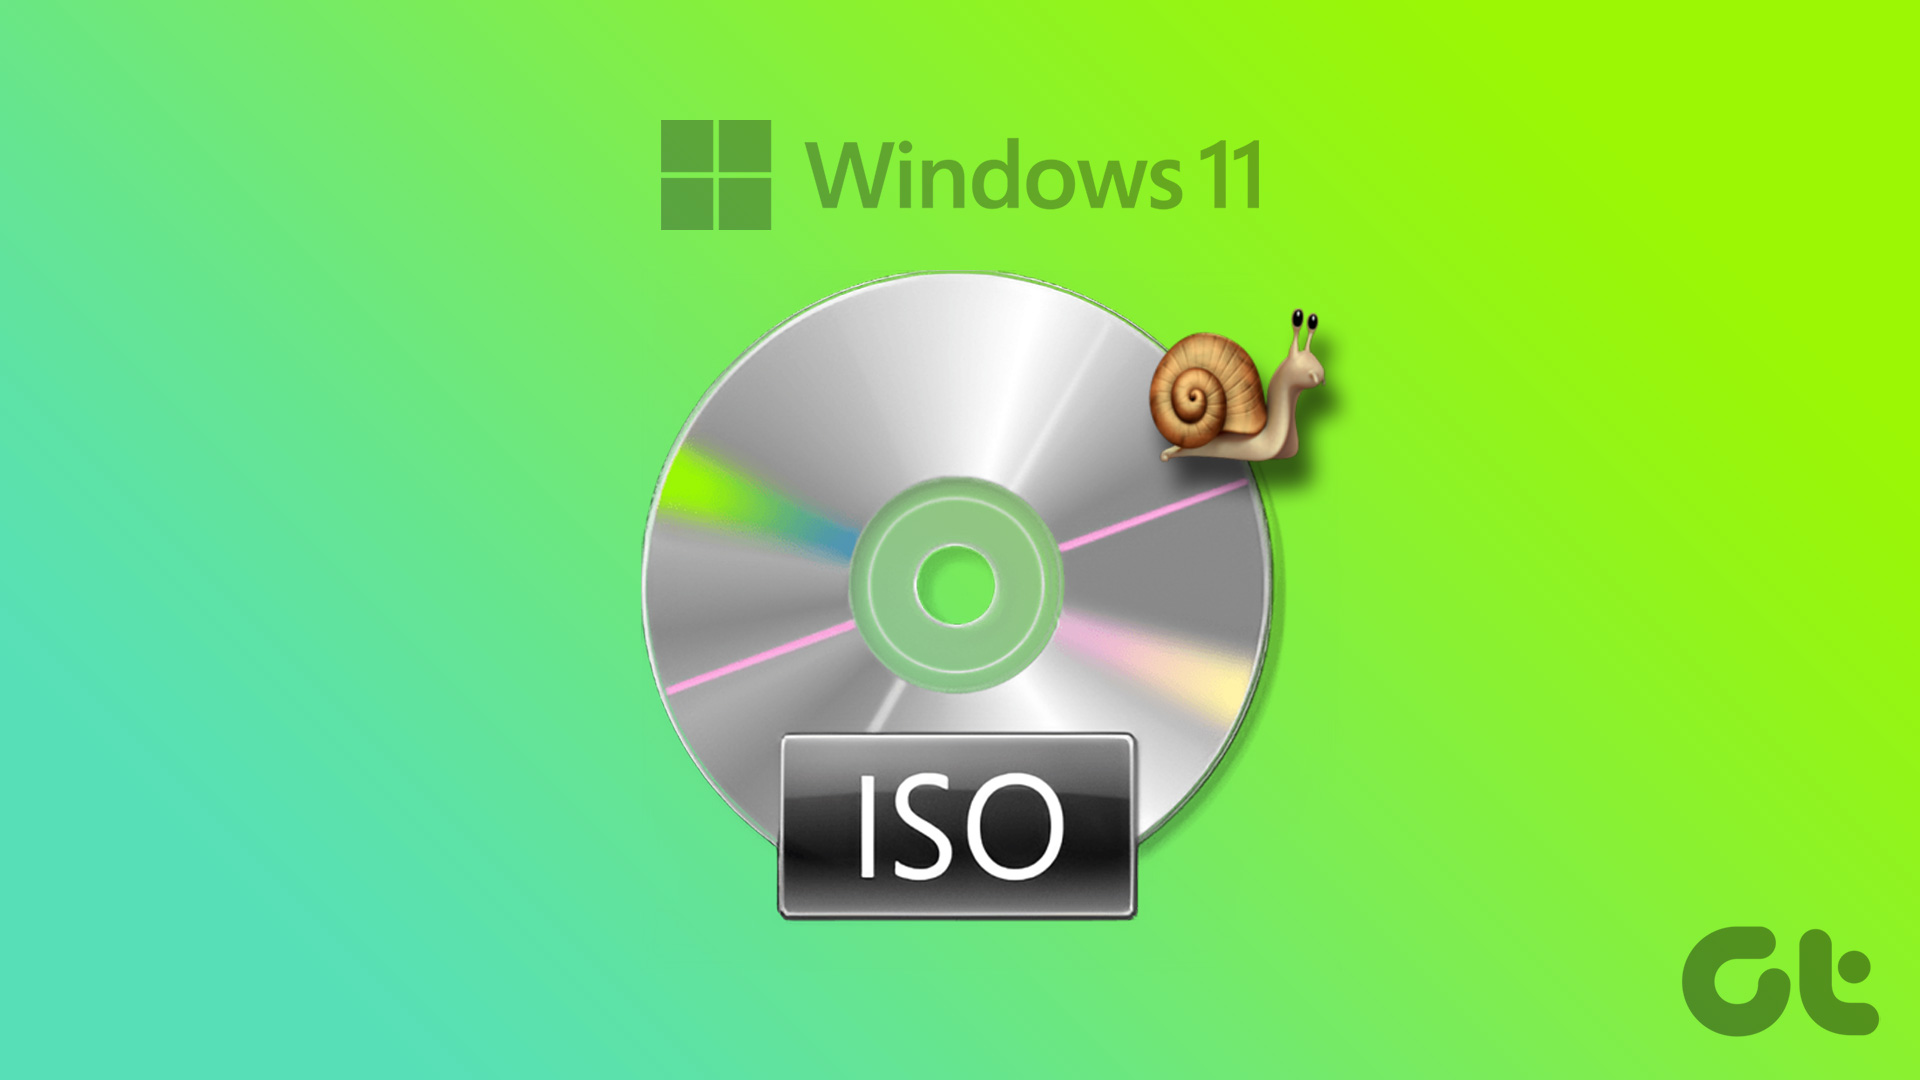 Windows 11 slow mounting ISO image files